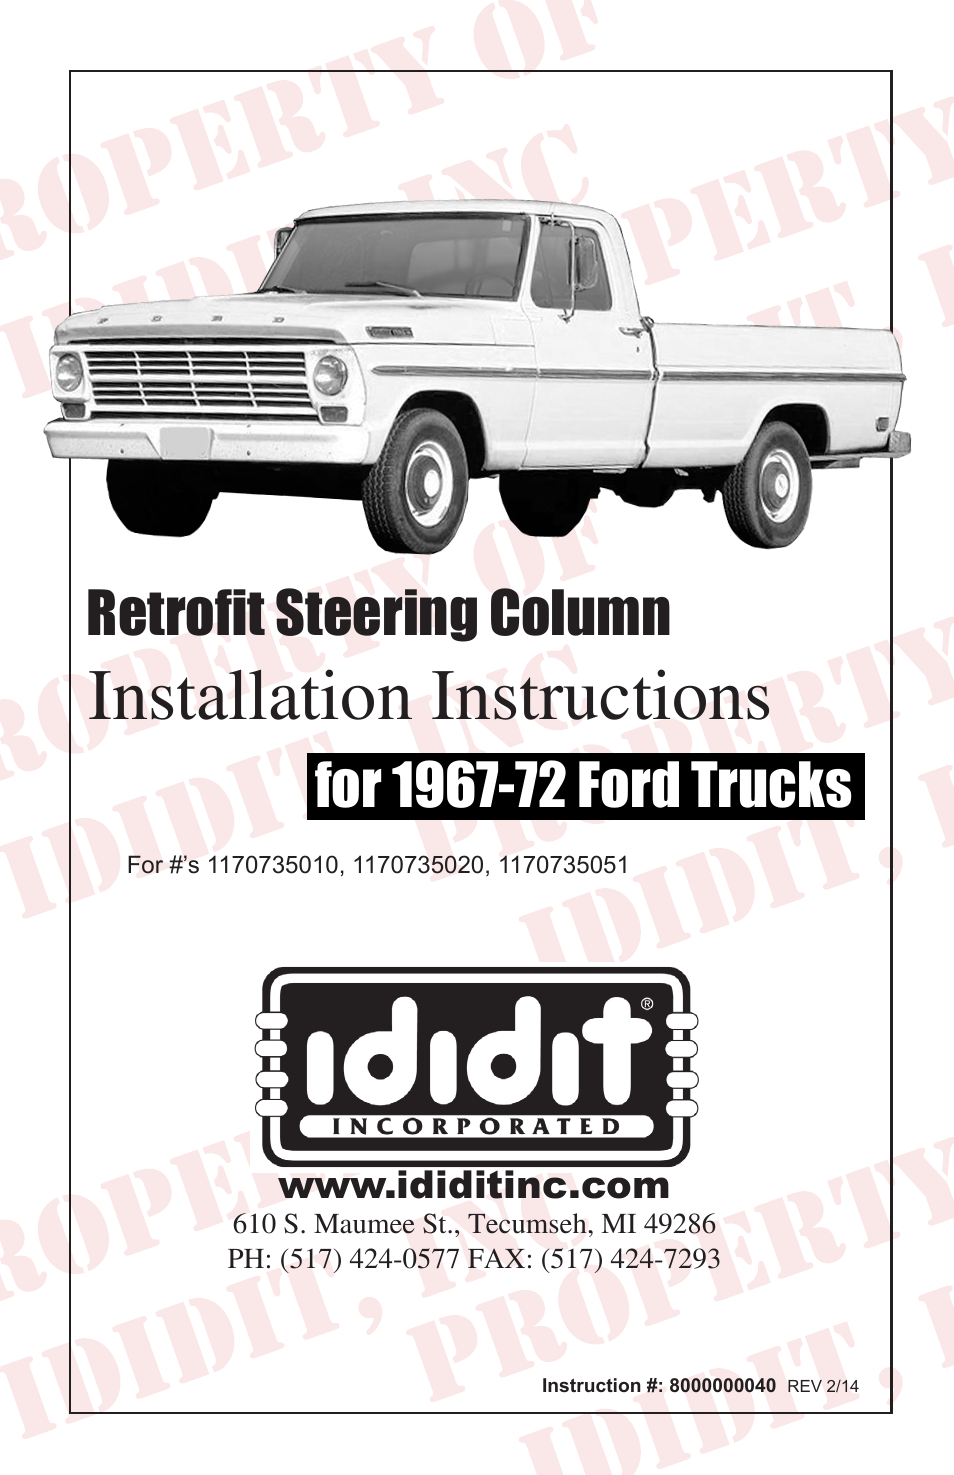 Retrofit Steering Column: 1967-72 Ford Truck